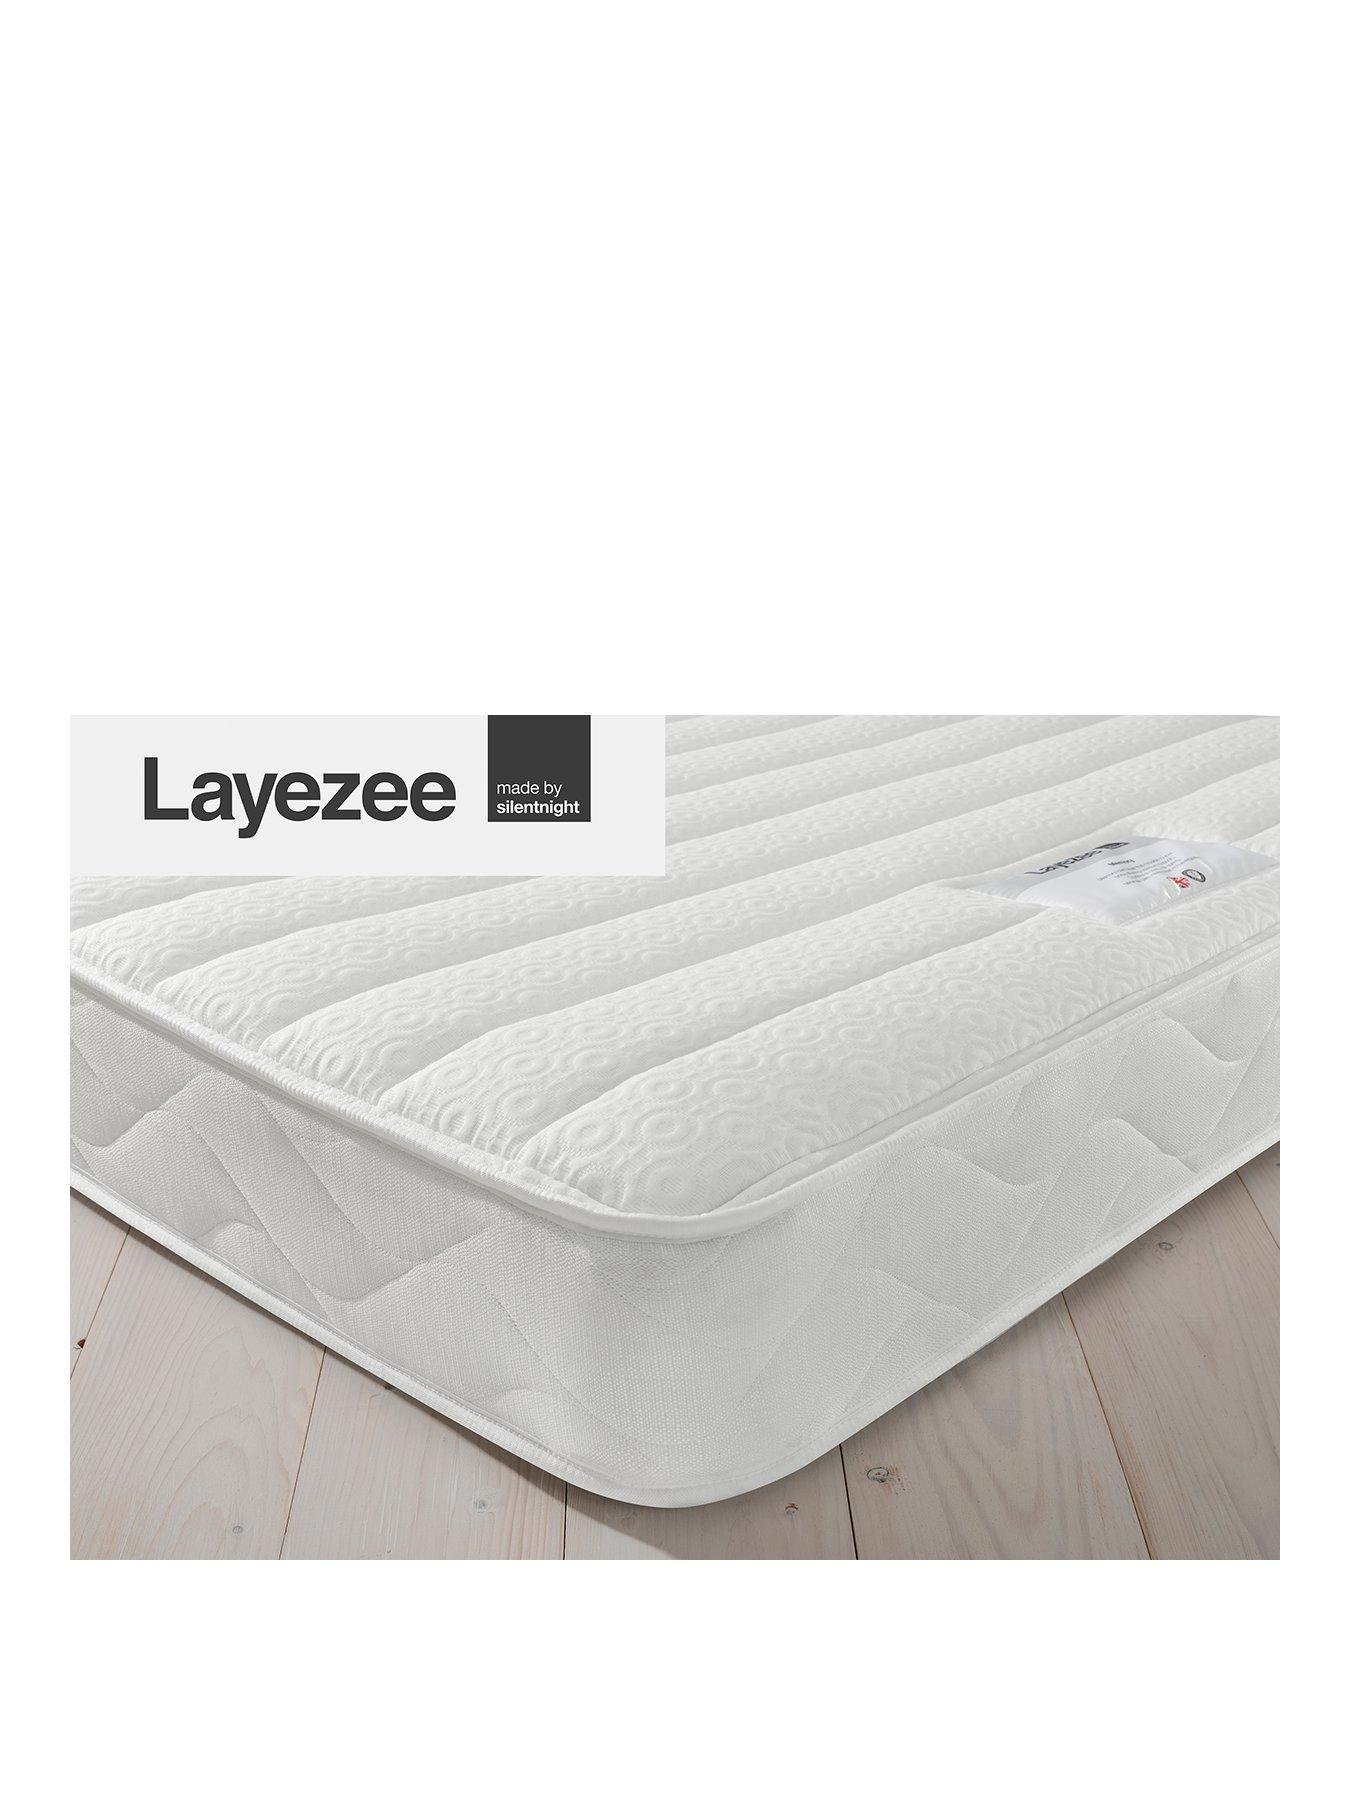 cot bed mattress 160 x 70